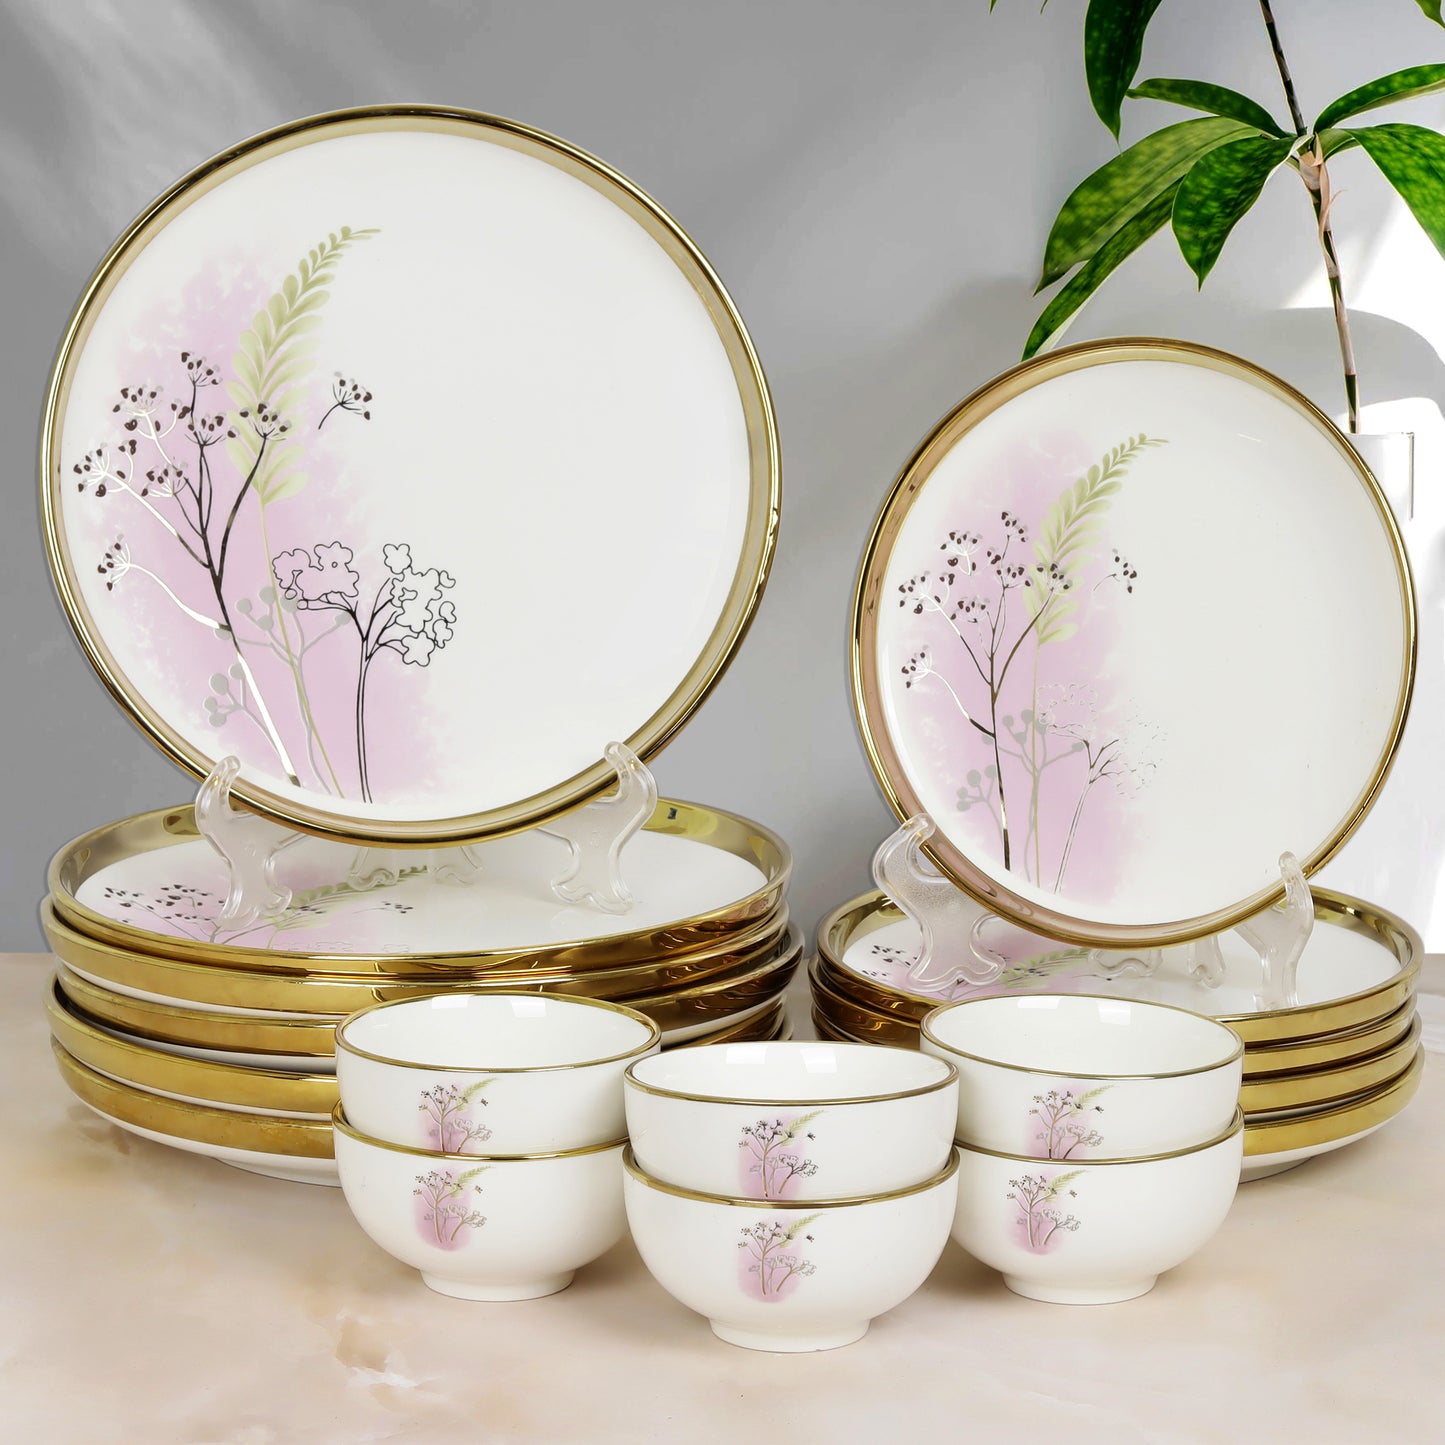 Swasha Porcelain Snacks Set of 18 Pieces | Tableware